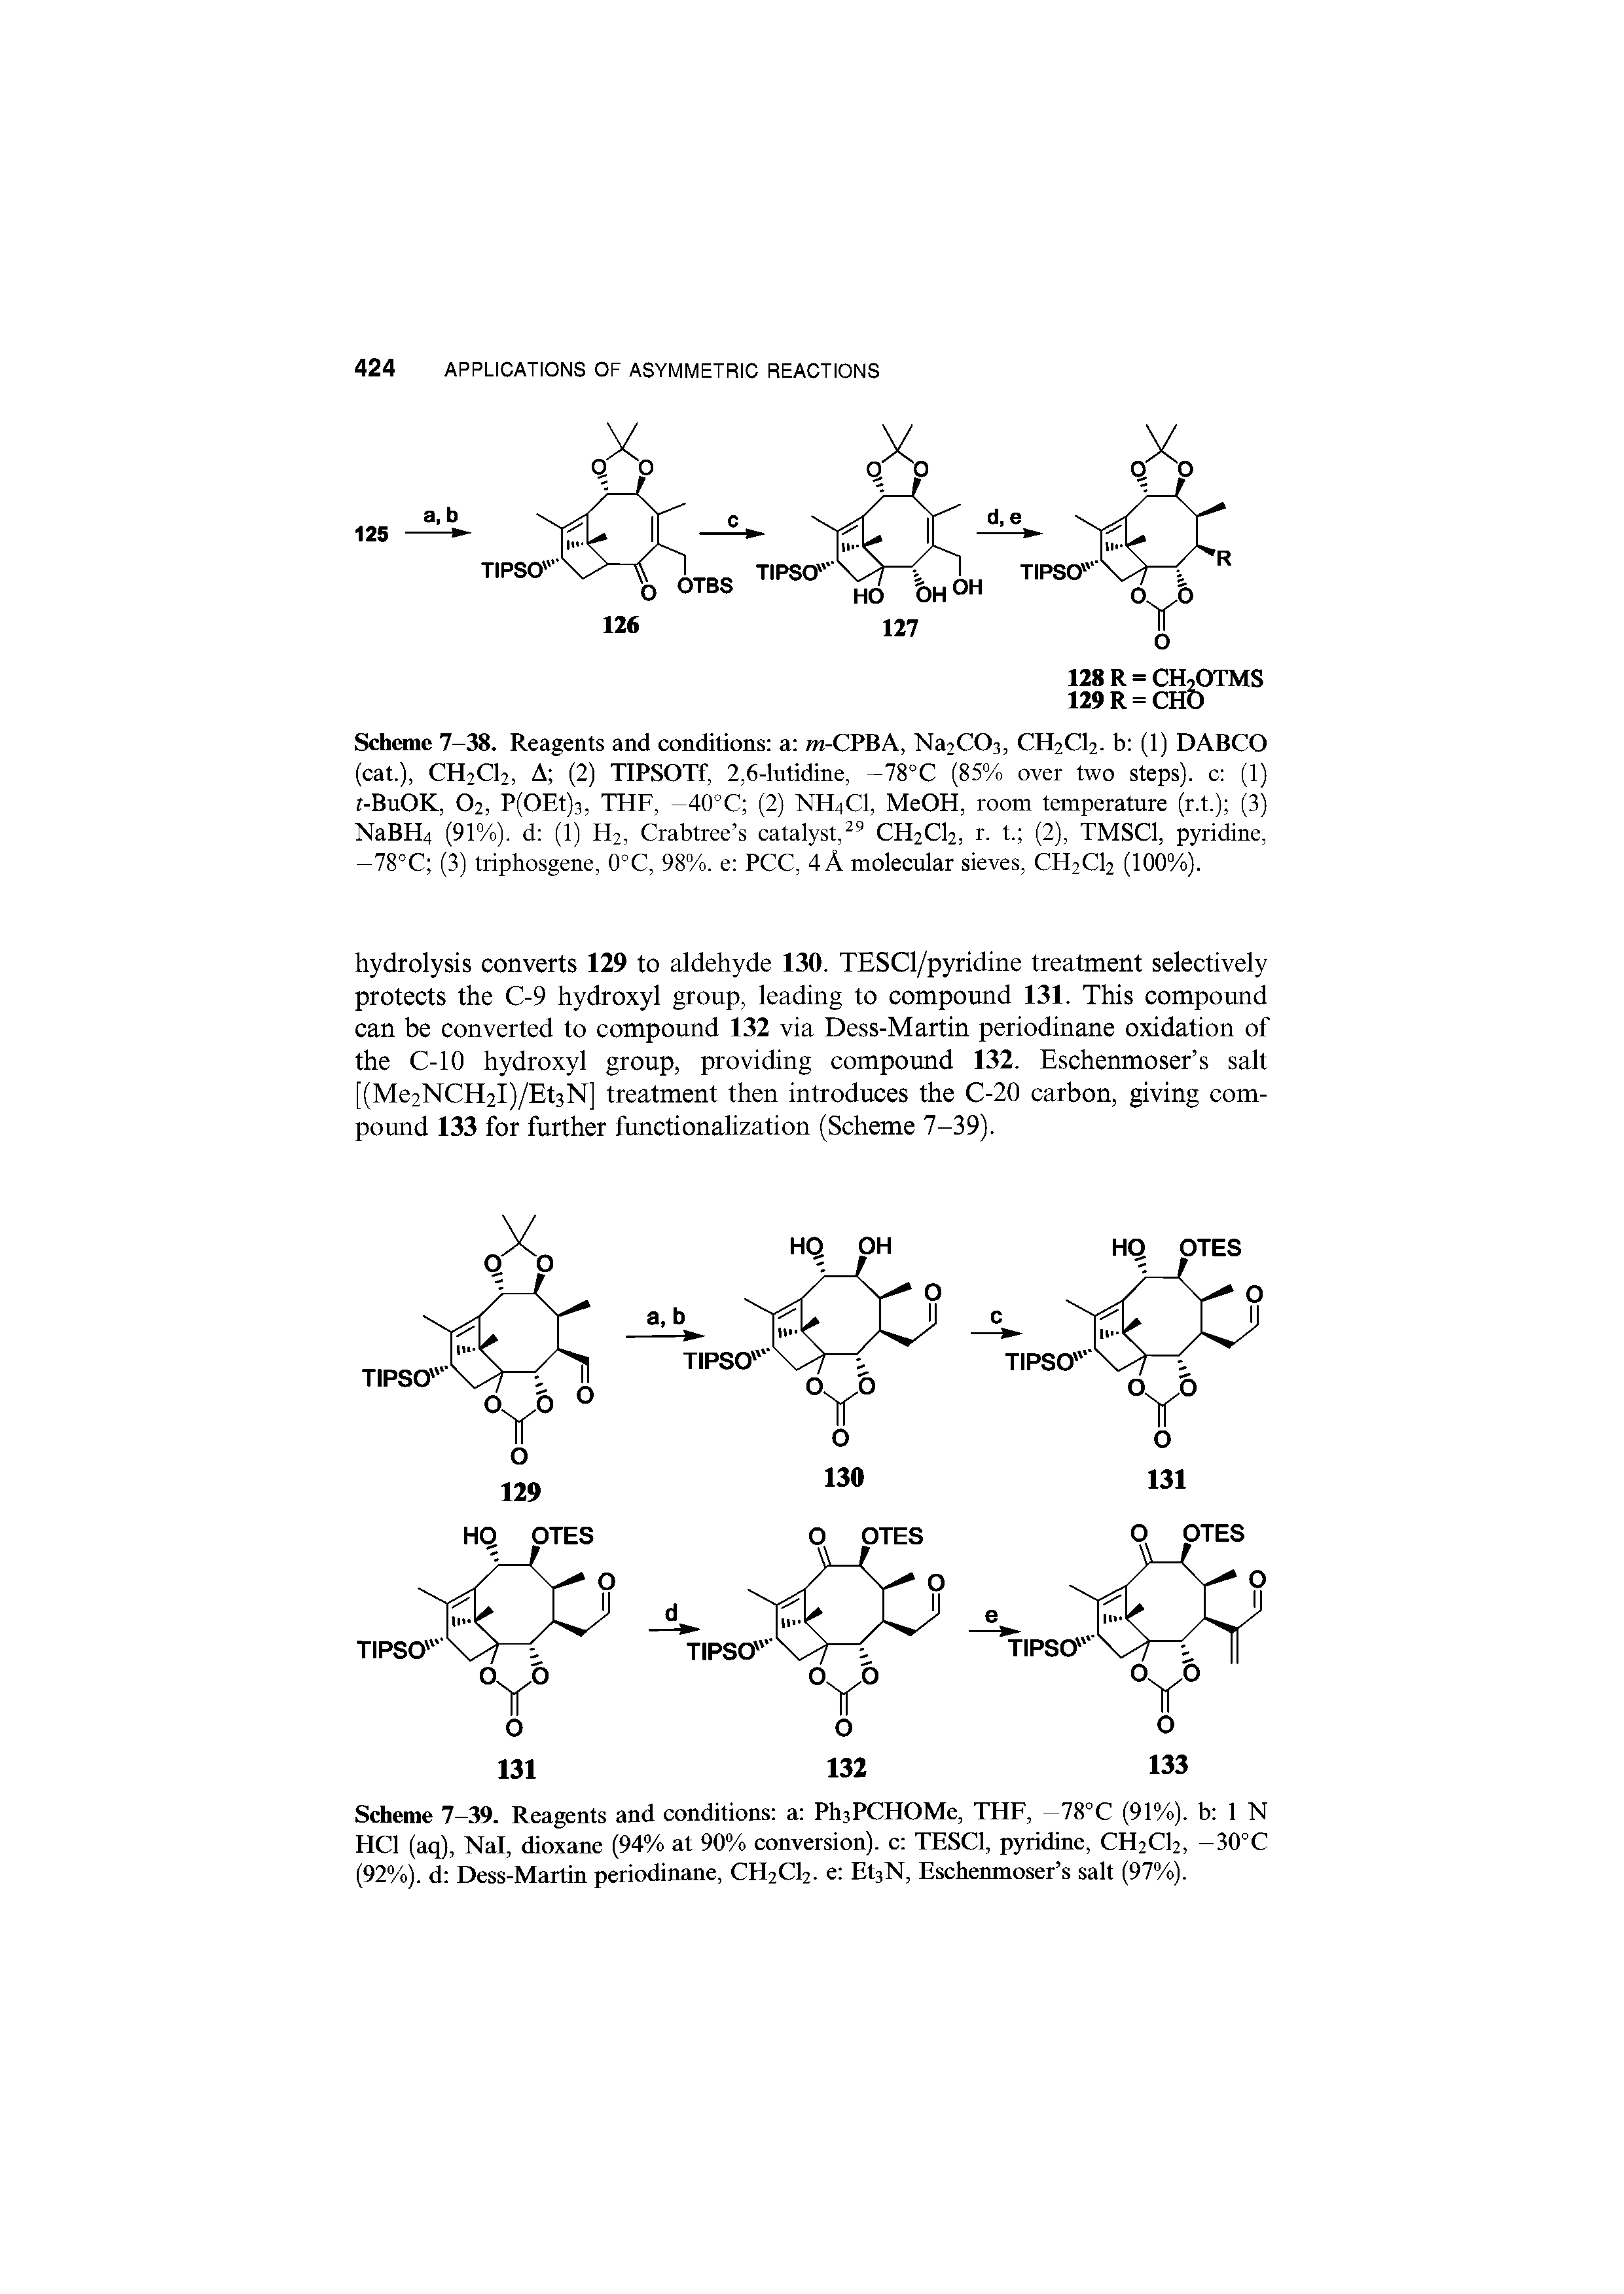 Scheme 7-39. Reagents and conditions a PI13PCIIOMC, THF, —78°C (91%). b 1 N HC1 (aq), Nal, dioxane (94% at 90% conversion), c TESC1, pyridine, CH2C12, -30°C (92%). d Dess-Martin periodinane, CH2C12. e Et3N, Eschenmoser s salt (97%).